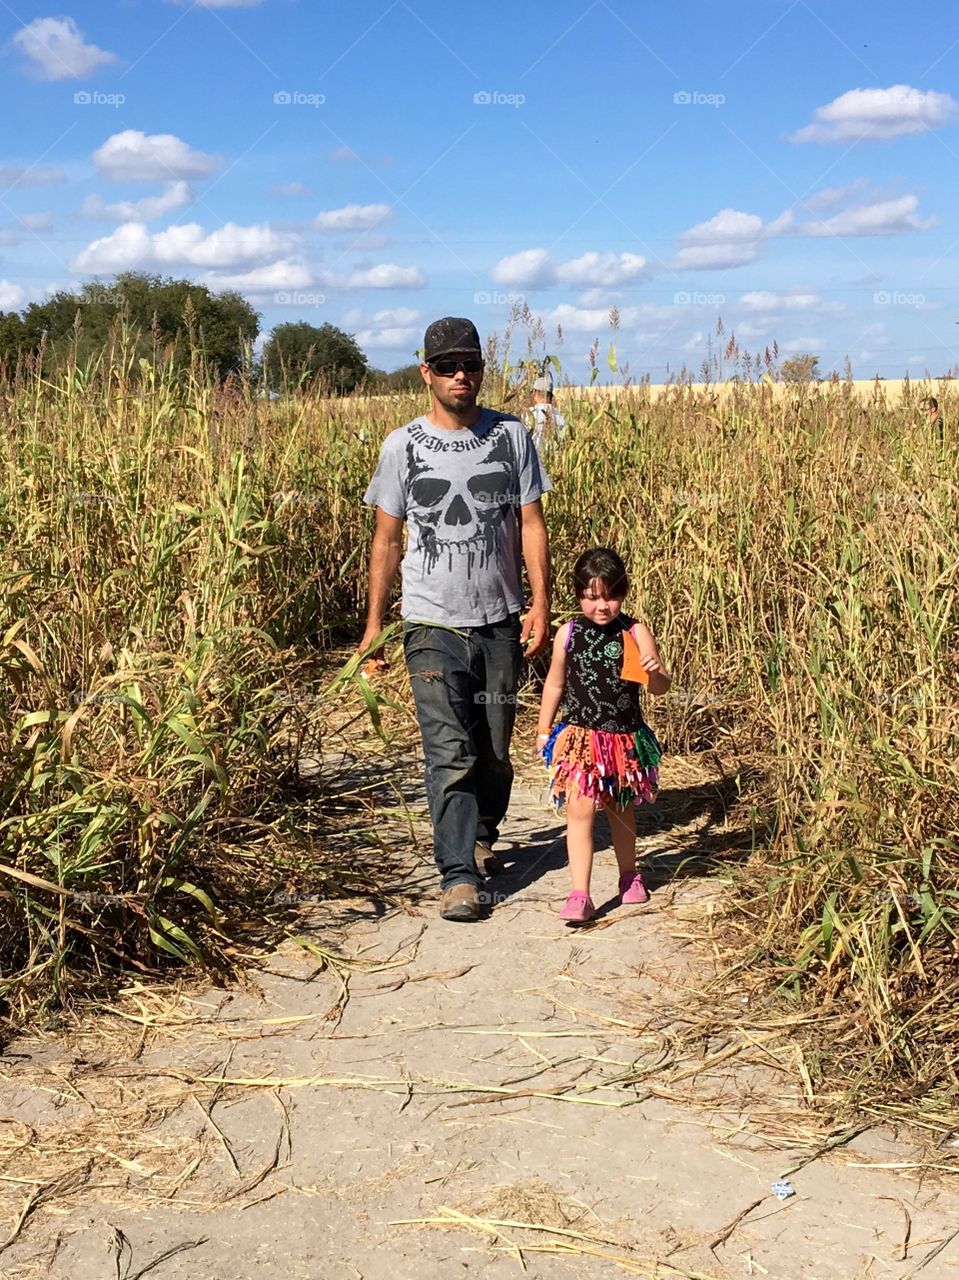 Corn maze with daddy 